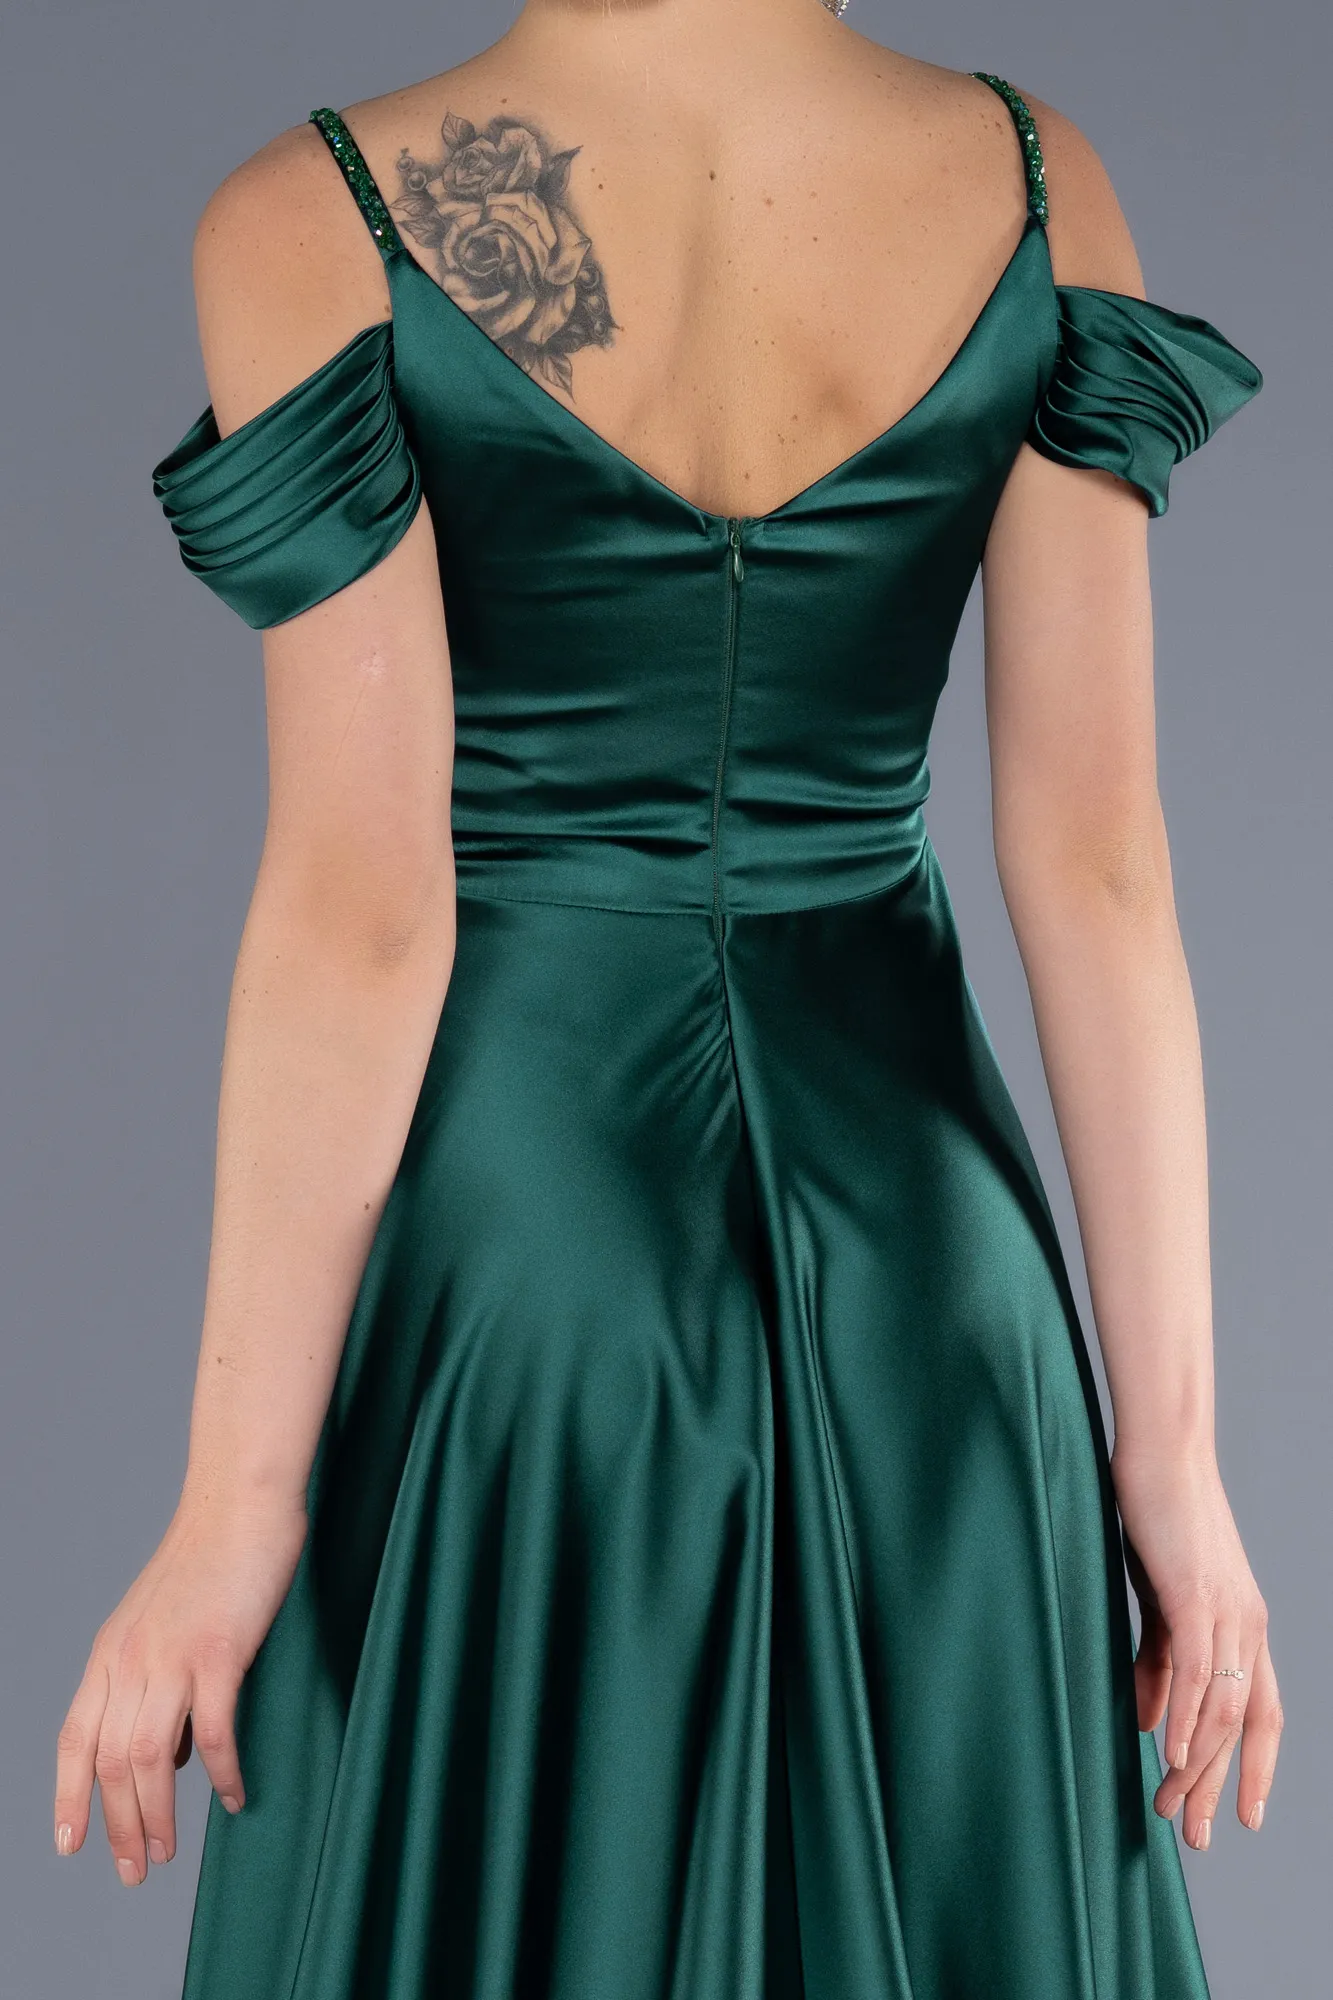 Emerald Green-Long Satin Evening Dress ABU3678